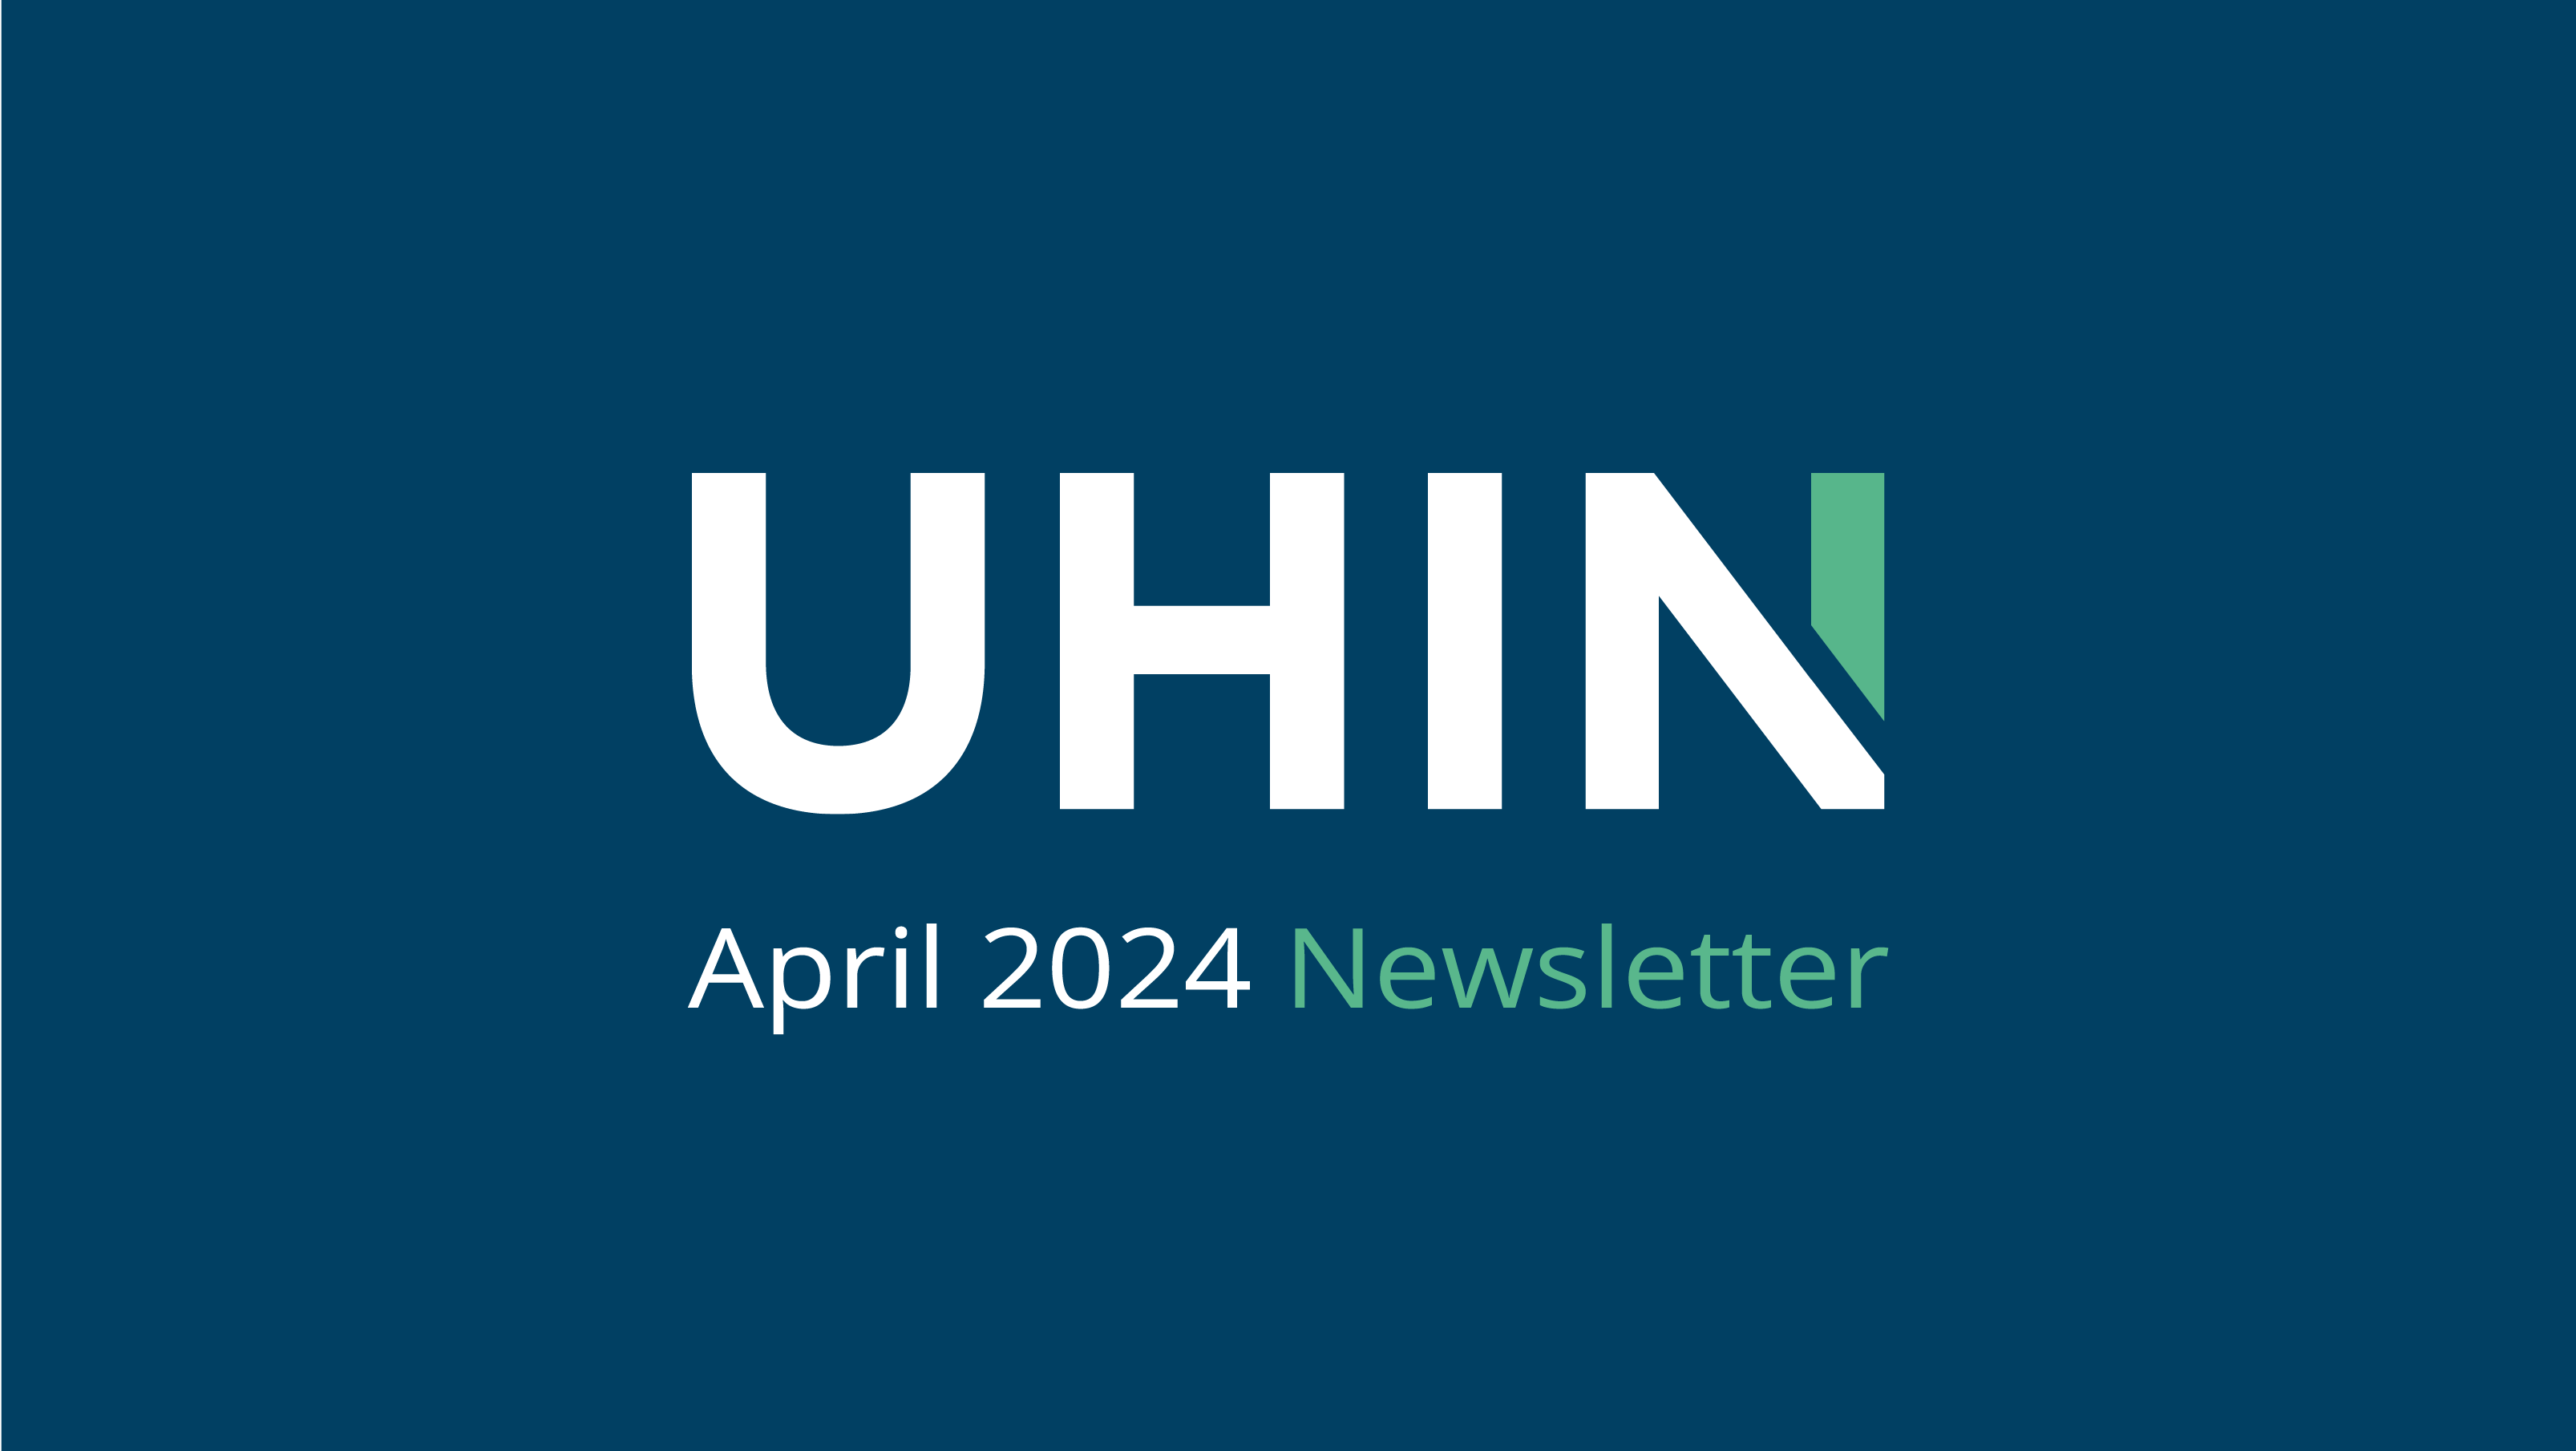 Newsletter: April 2024 Issue